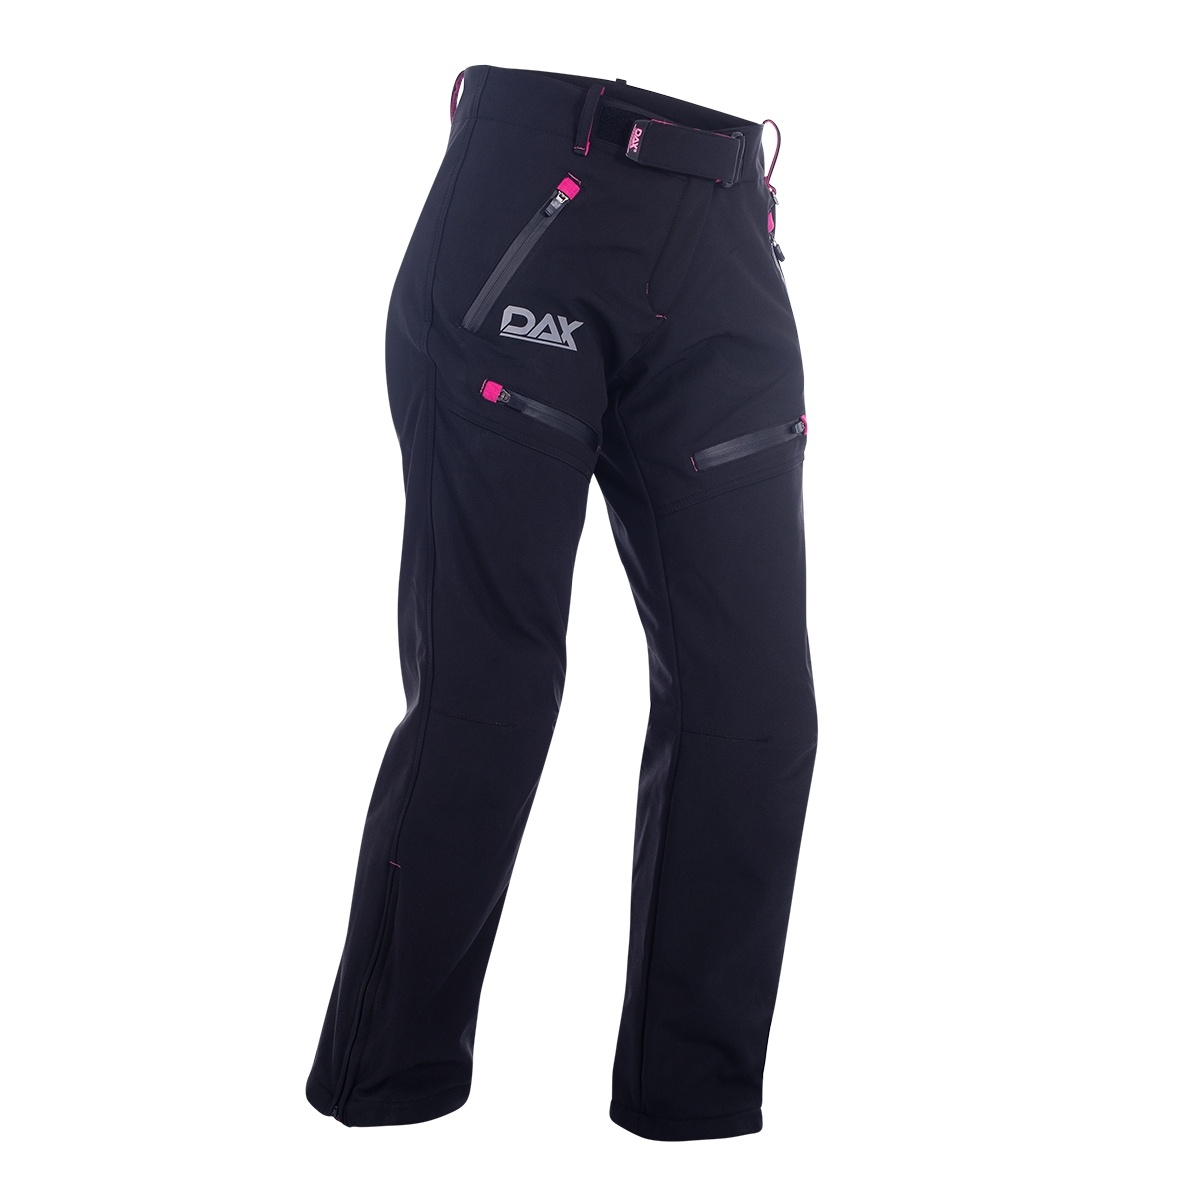 Obrázek produktu DAX LADY kalhoty M, SoftShell, s chrániči 2870-PNT-BP-M